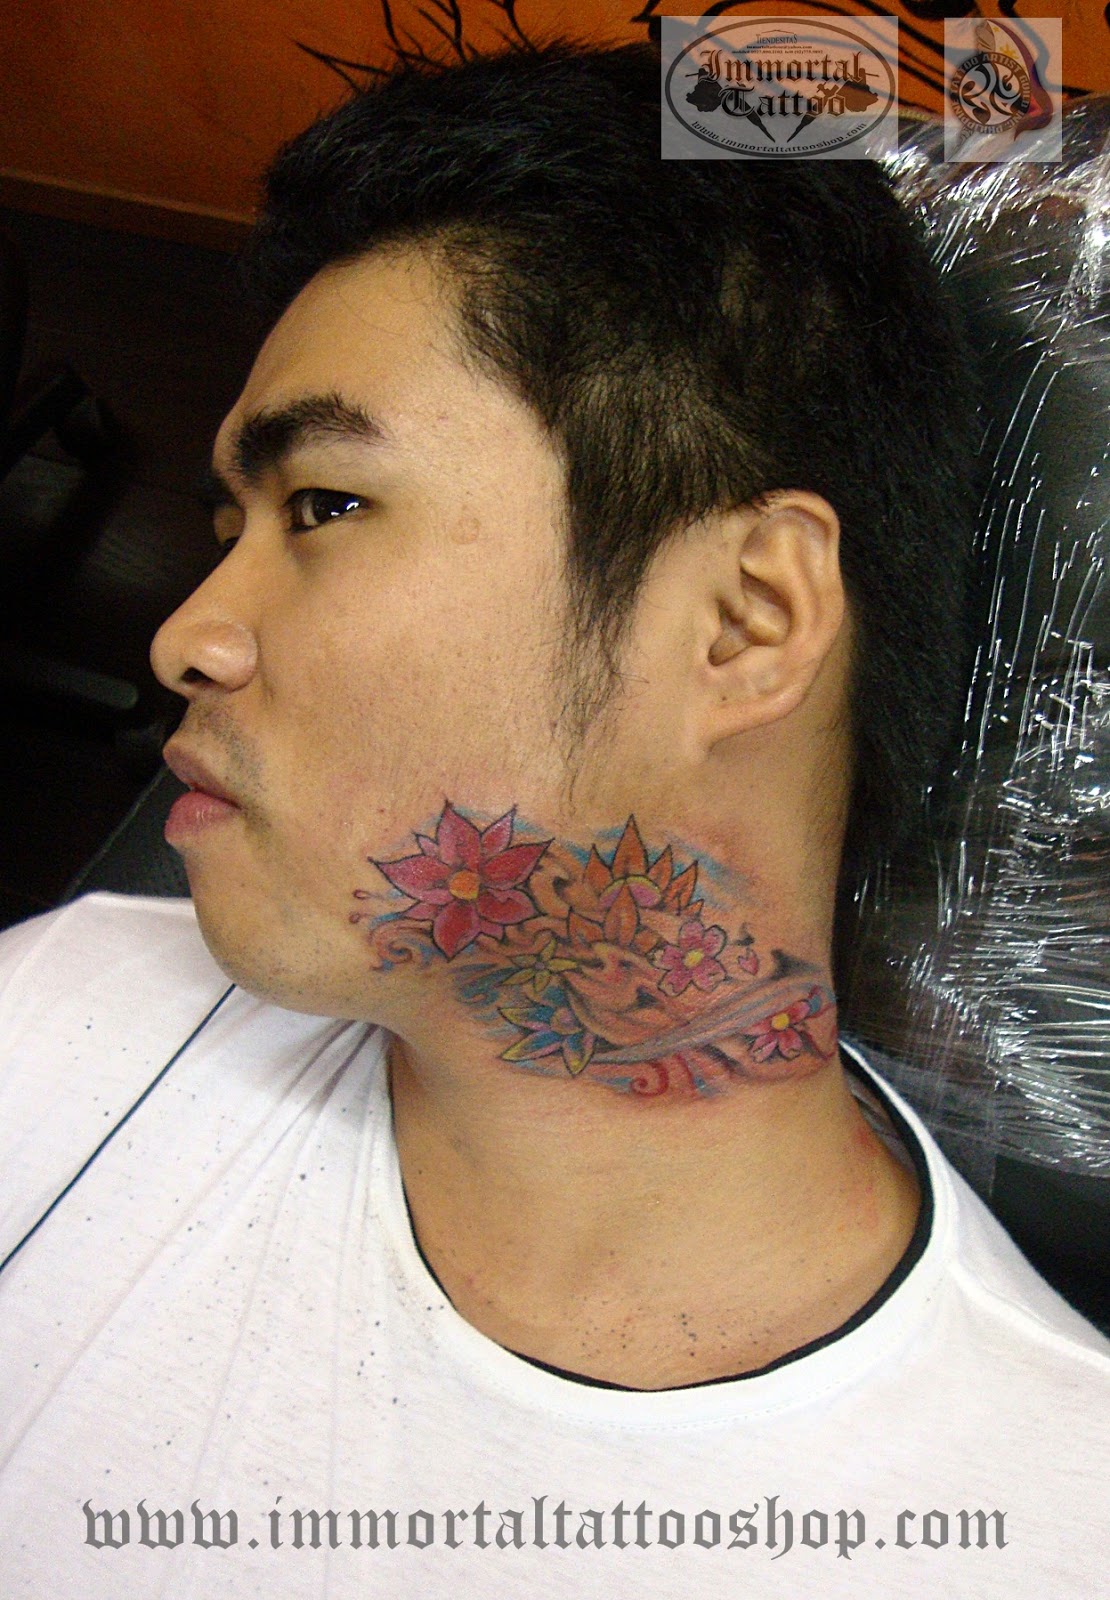 IMMORTAL TATTOO MANILA PHILIPPINES by frank ibanez jr.: Face tattoo